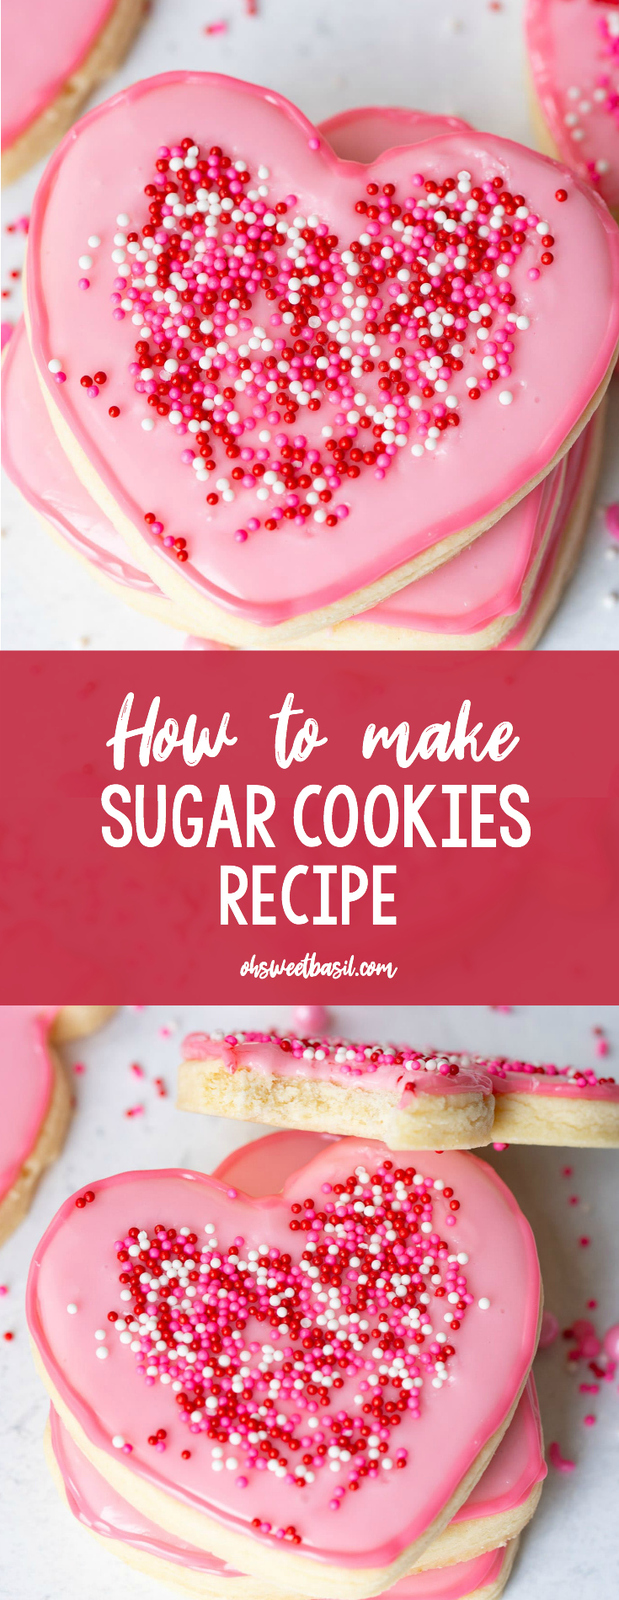 ow-to-make-sugar-cookies-recipe-ohsweetbasil.com2_.jpg